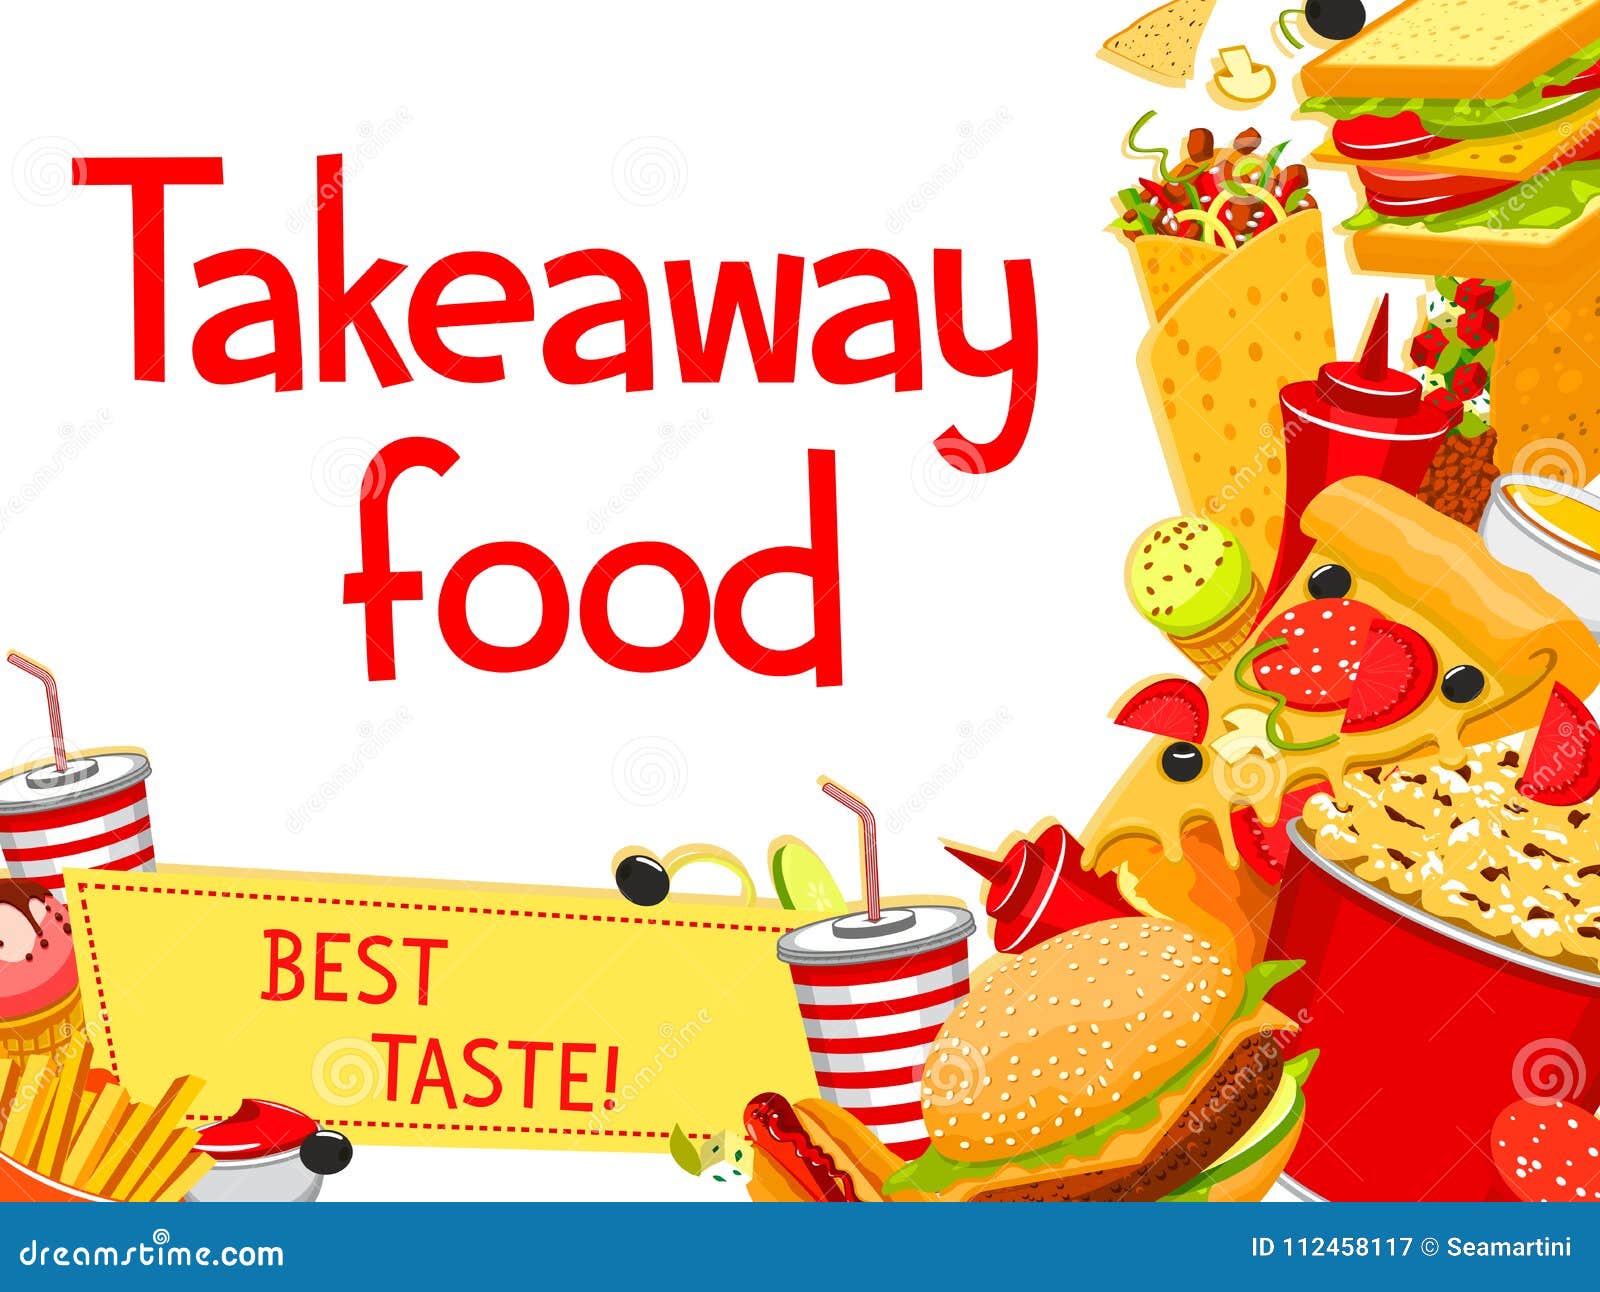 Vector Fast Food Takeaway Menu Poster Design Stock Vector Intended For Takeaway Menu Template Free